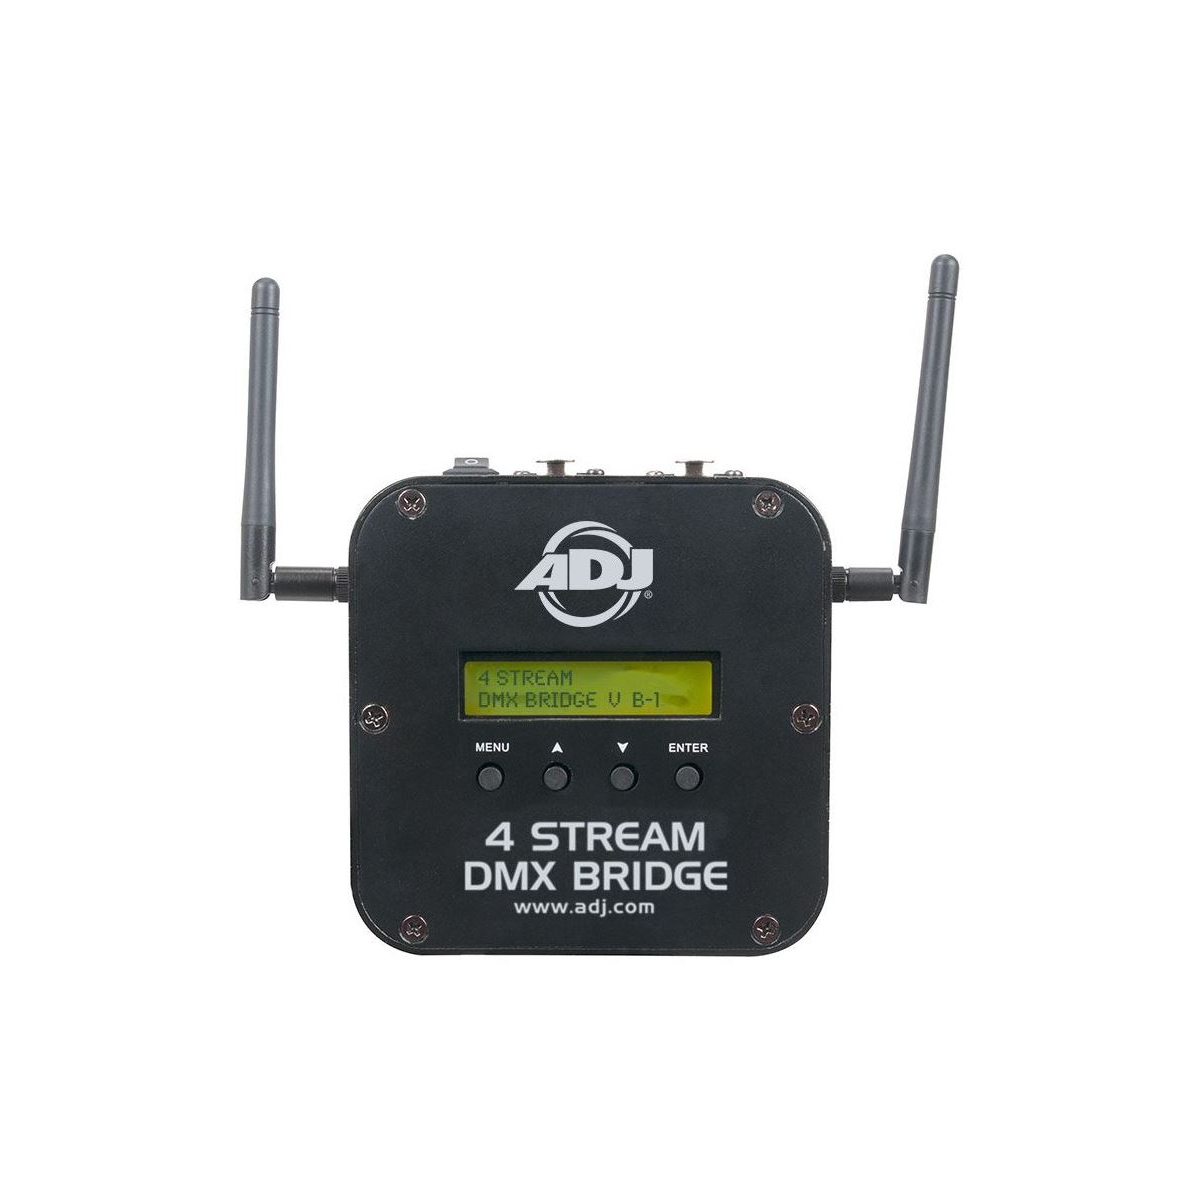 DMX sans fil - ADJ - 4 Stream DMX Bridge